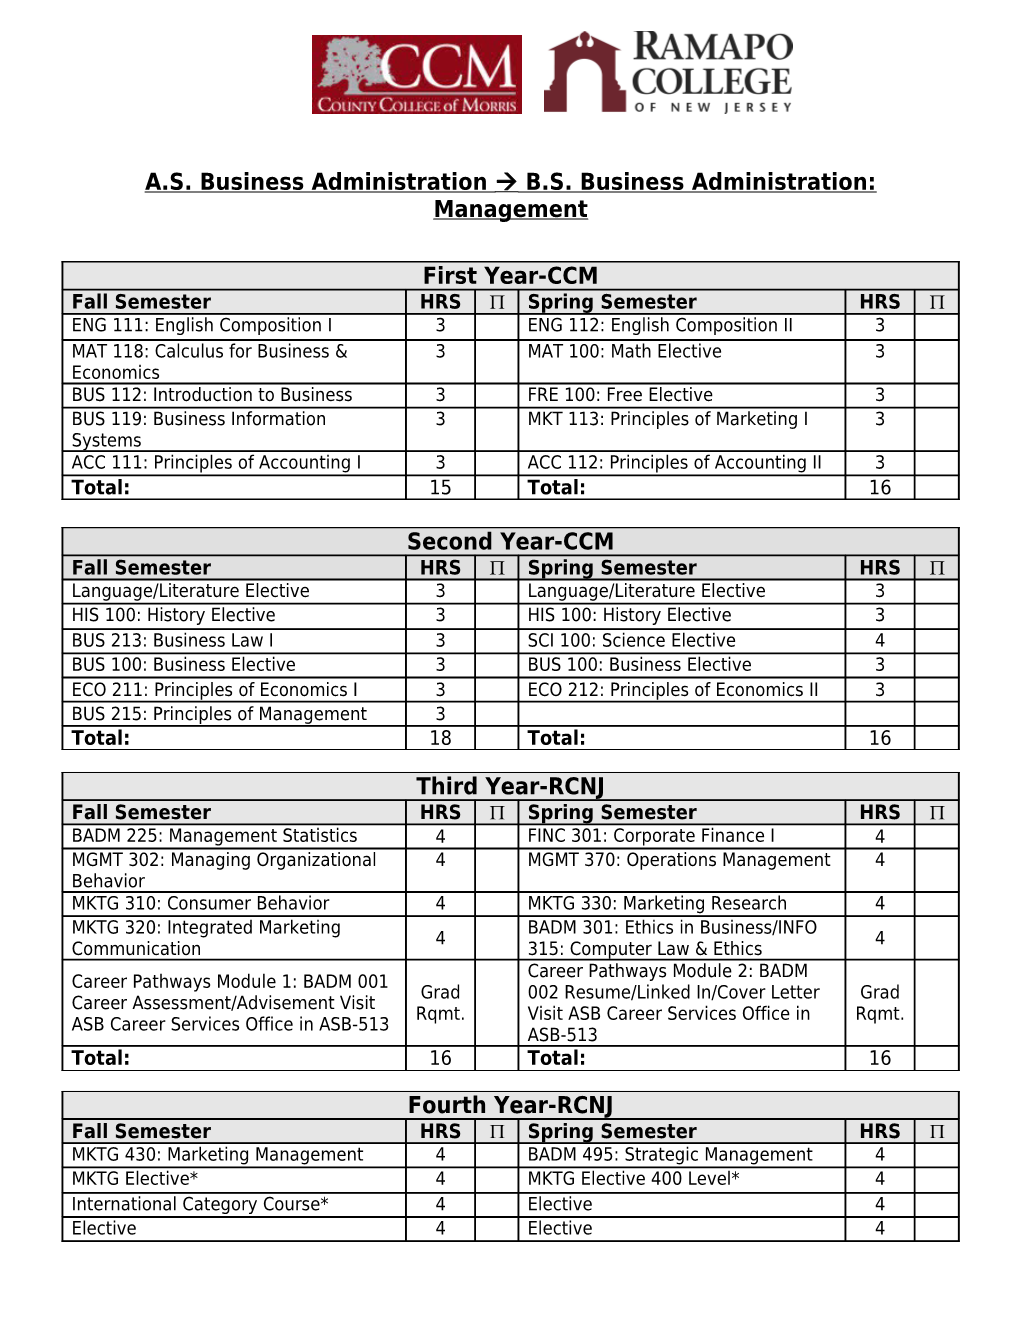 A.S. Business Administration À B.S. Business Administration: Management